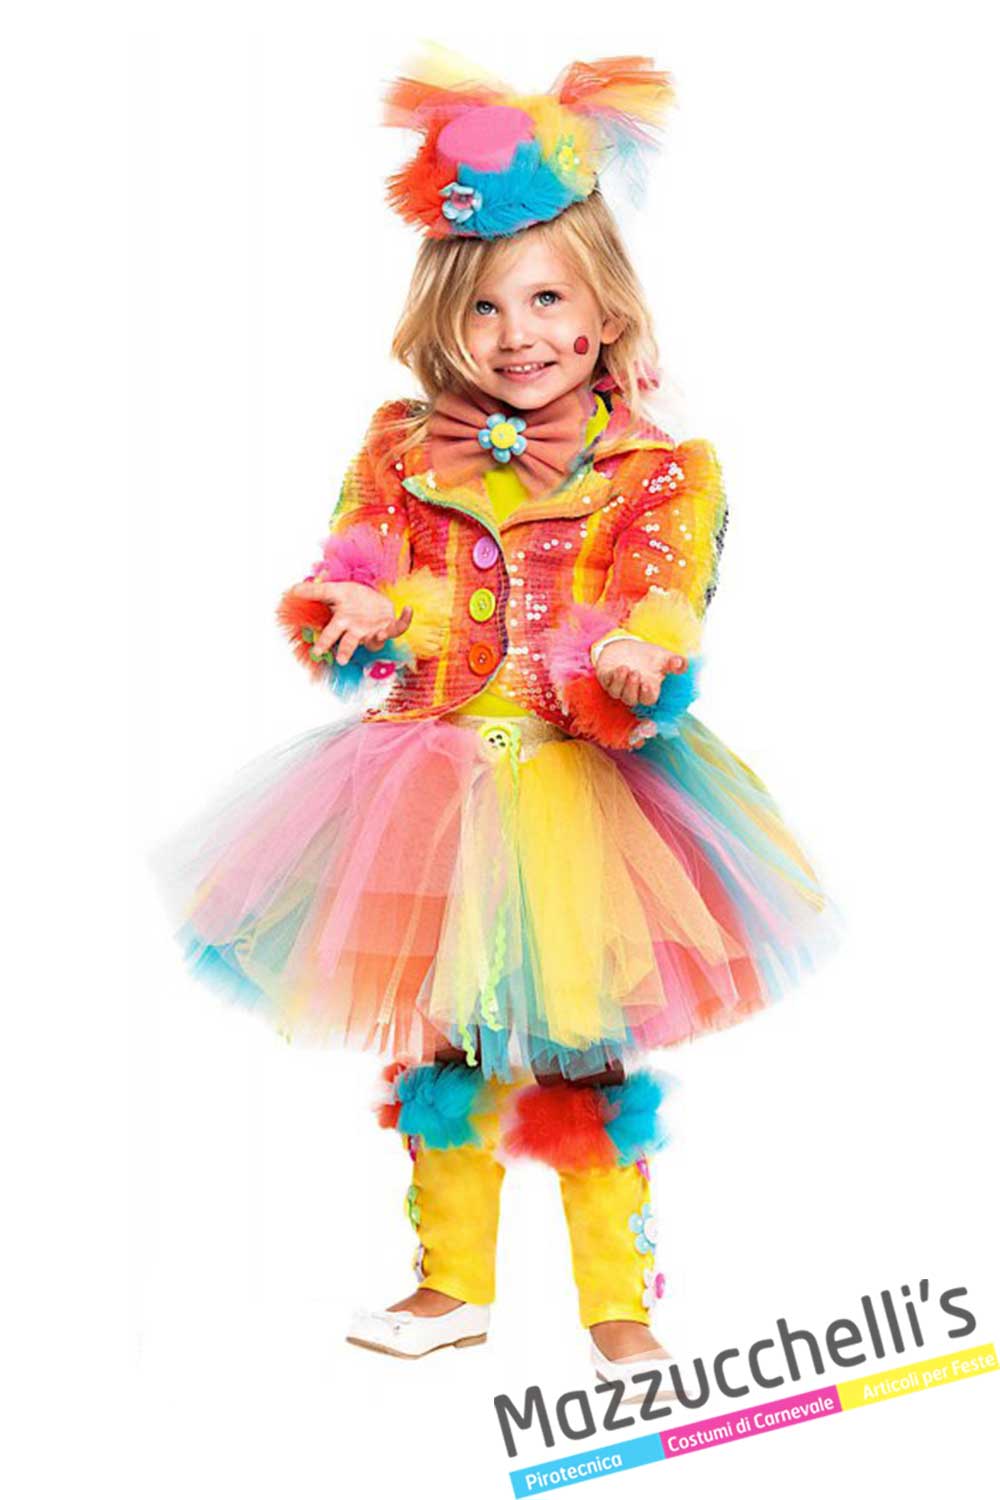 https://mazzucchellis.com/wp-content/uploads/2018/11/costume-bambina-clown-pagliaccio-circo-Mazzucchellis.jpg